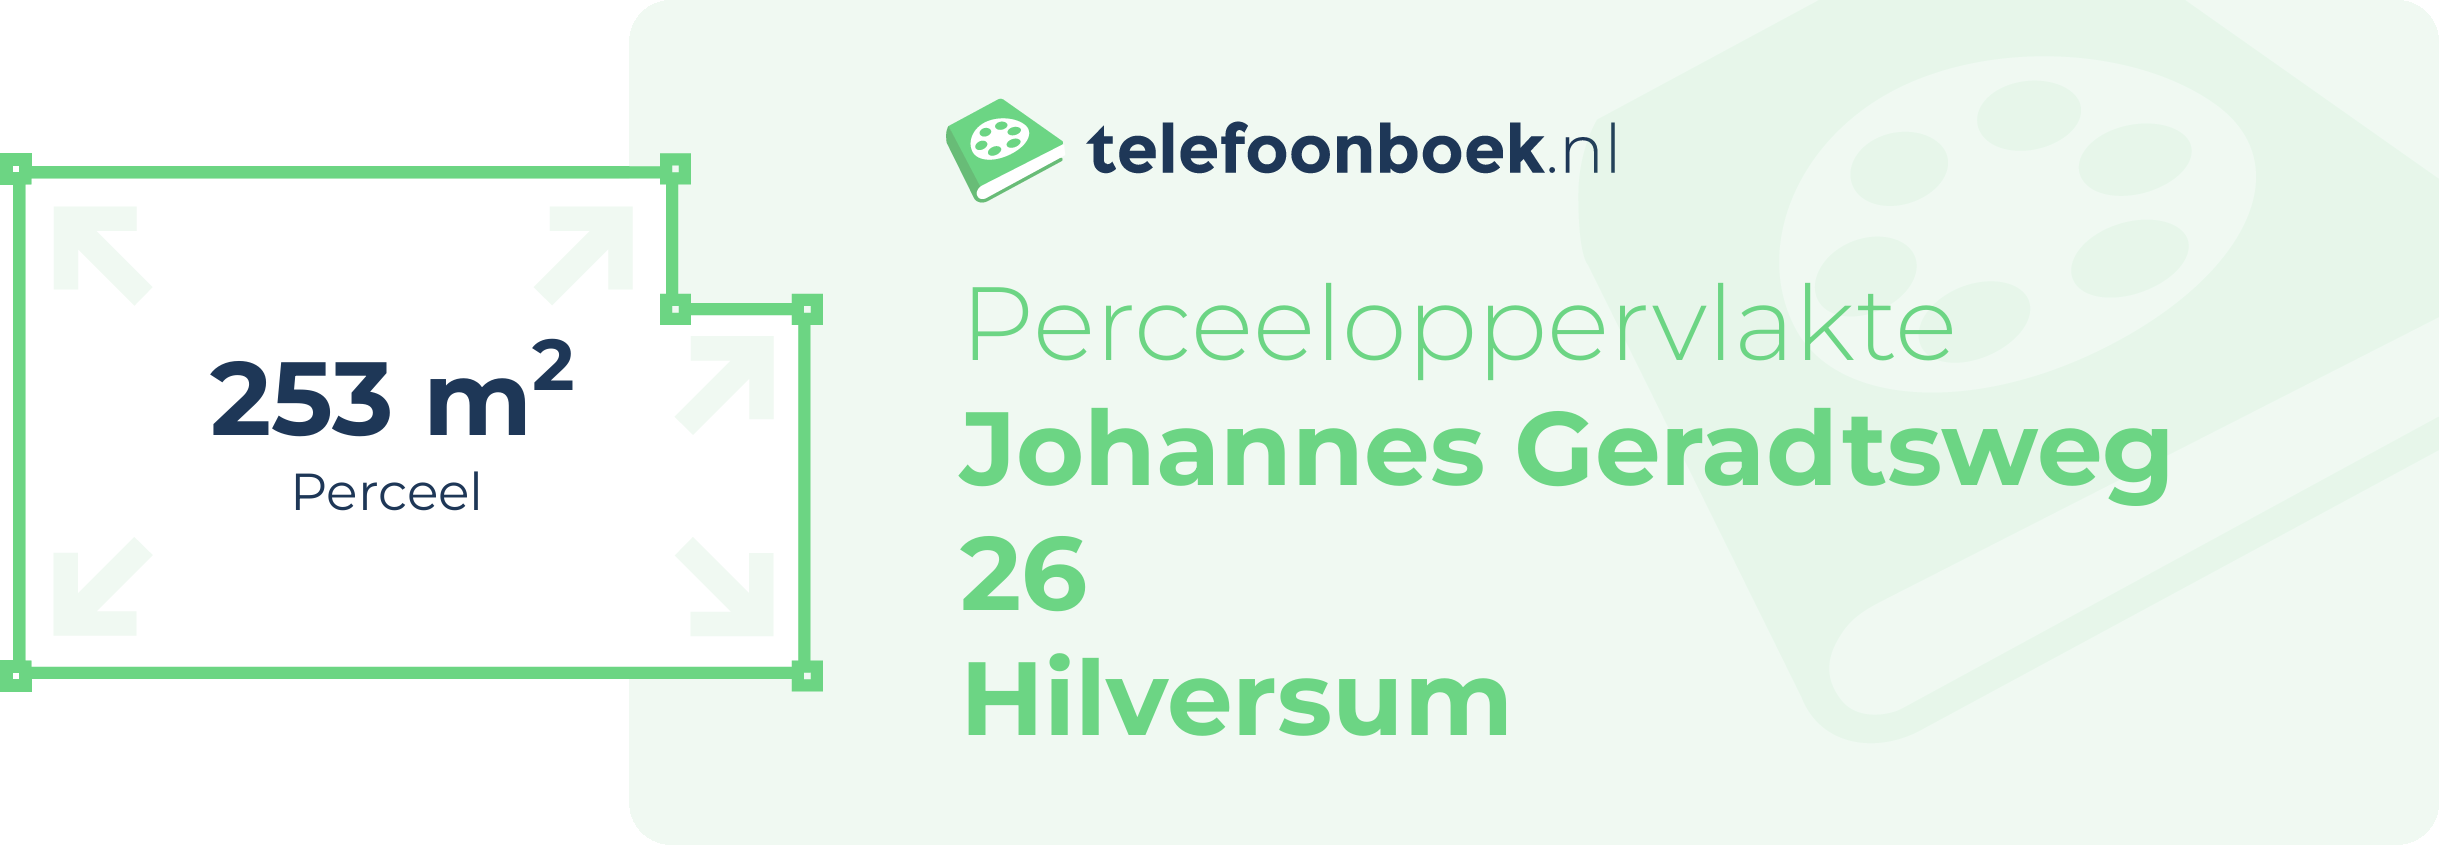 Perceeloppervlakte Johannes Geradtsweg 26 Hilversum